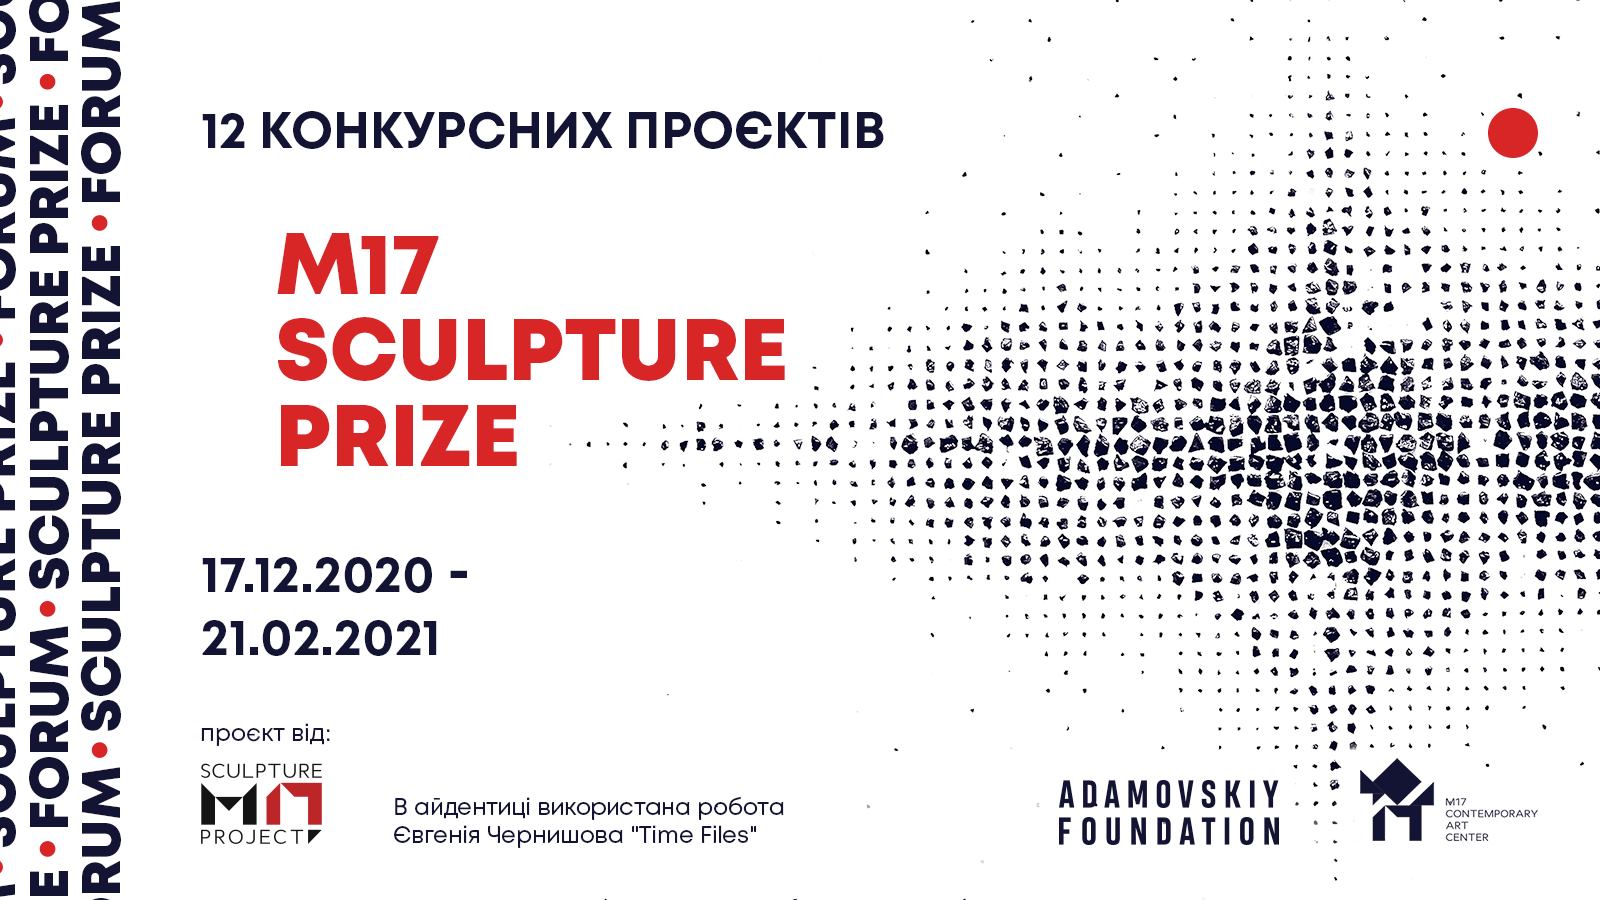 Sculpture Prize